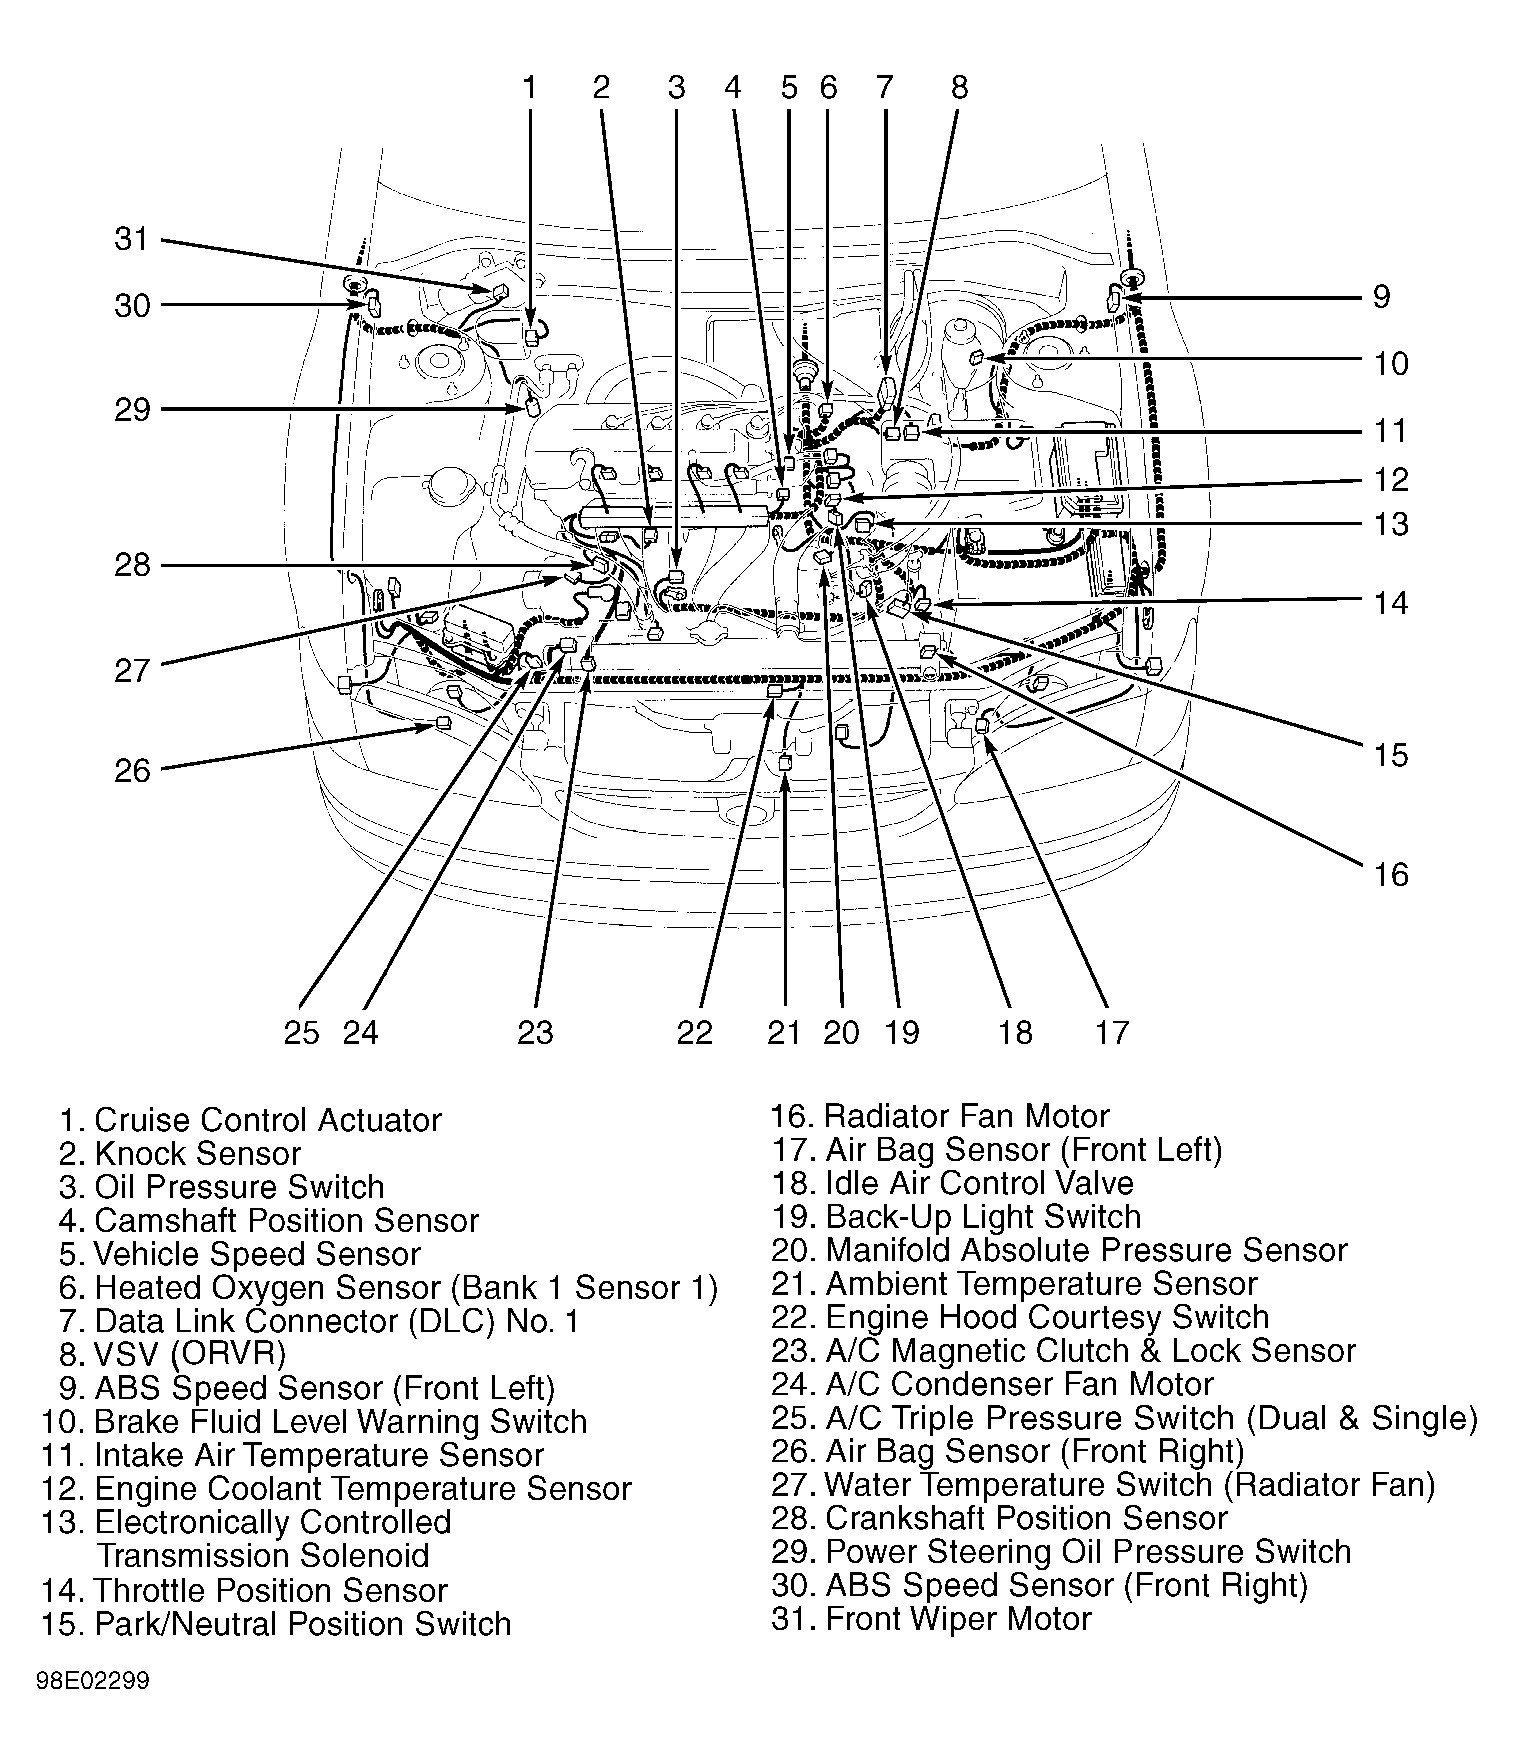 Diagram Of A Manual Transmission Corolla Wiring Diagram Valid 1999 toyota Corolla Parts Diagram New